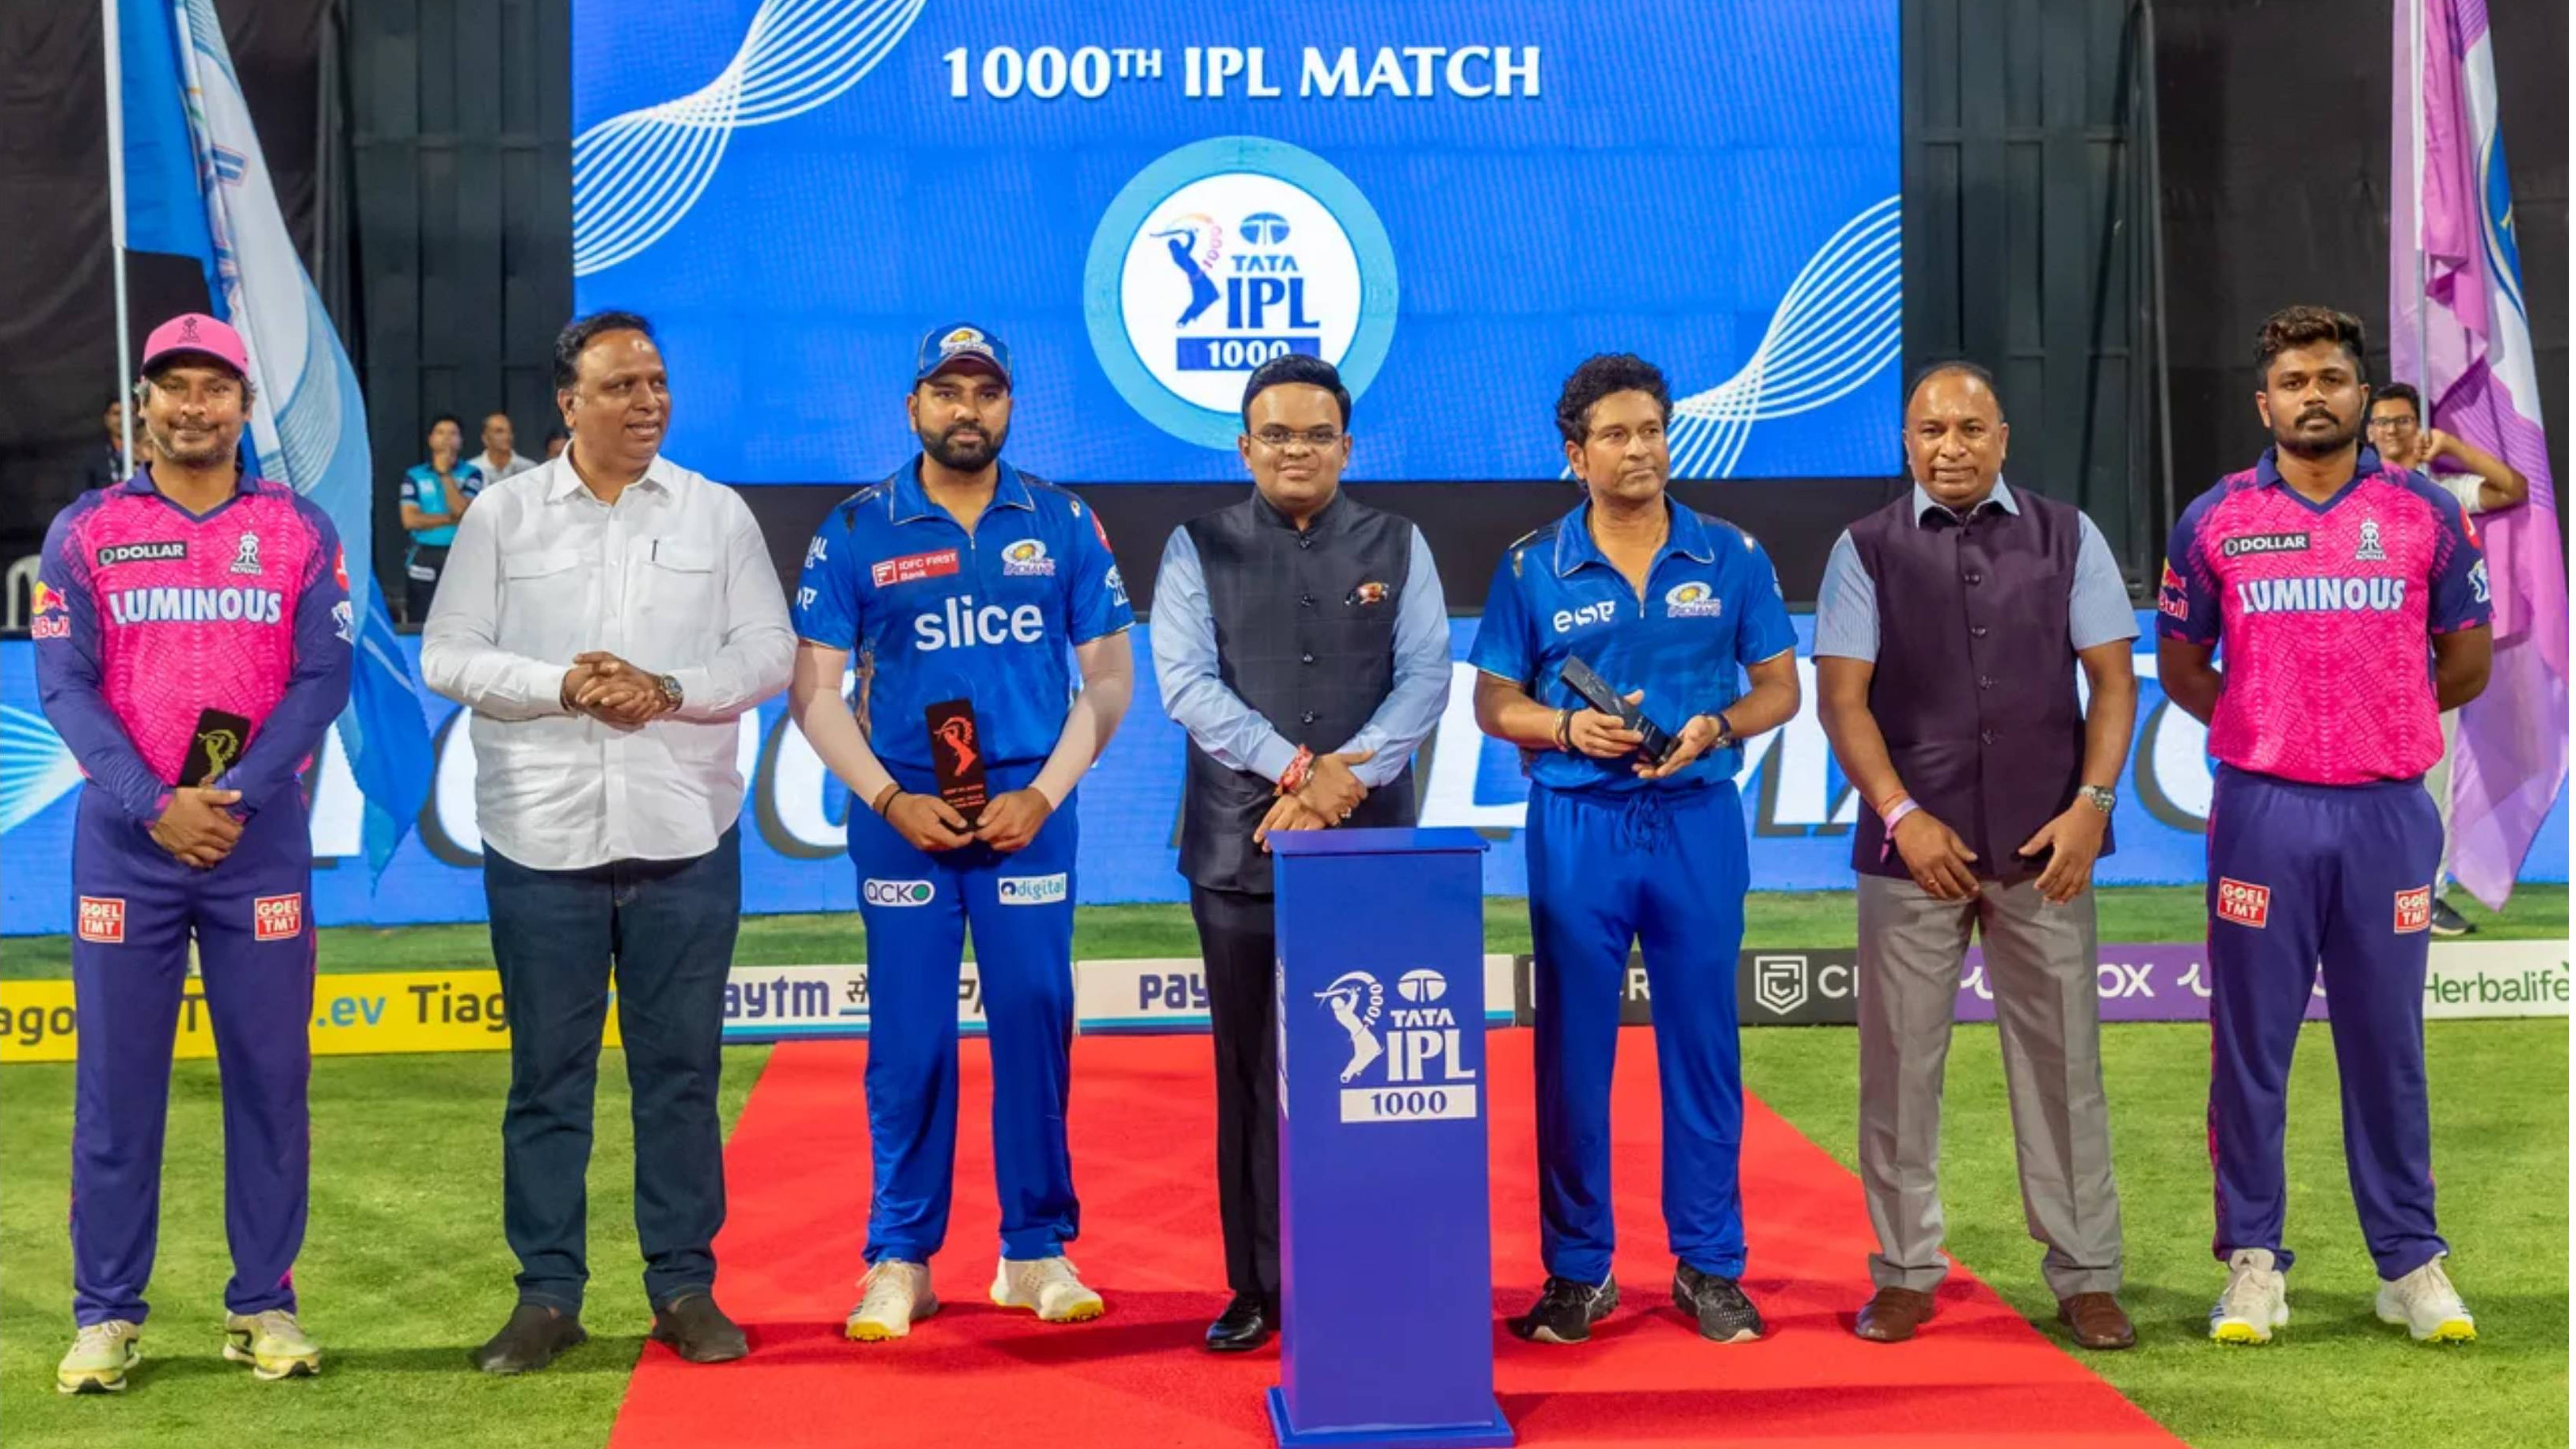 IPL 2023: WATCH – Rohit, Tendulkar, Samson and Sangakkara presented with mementos to mark IPL’s 1000th match